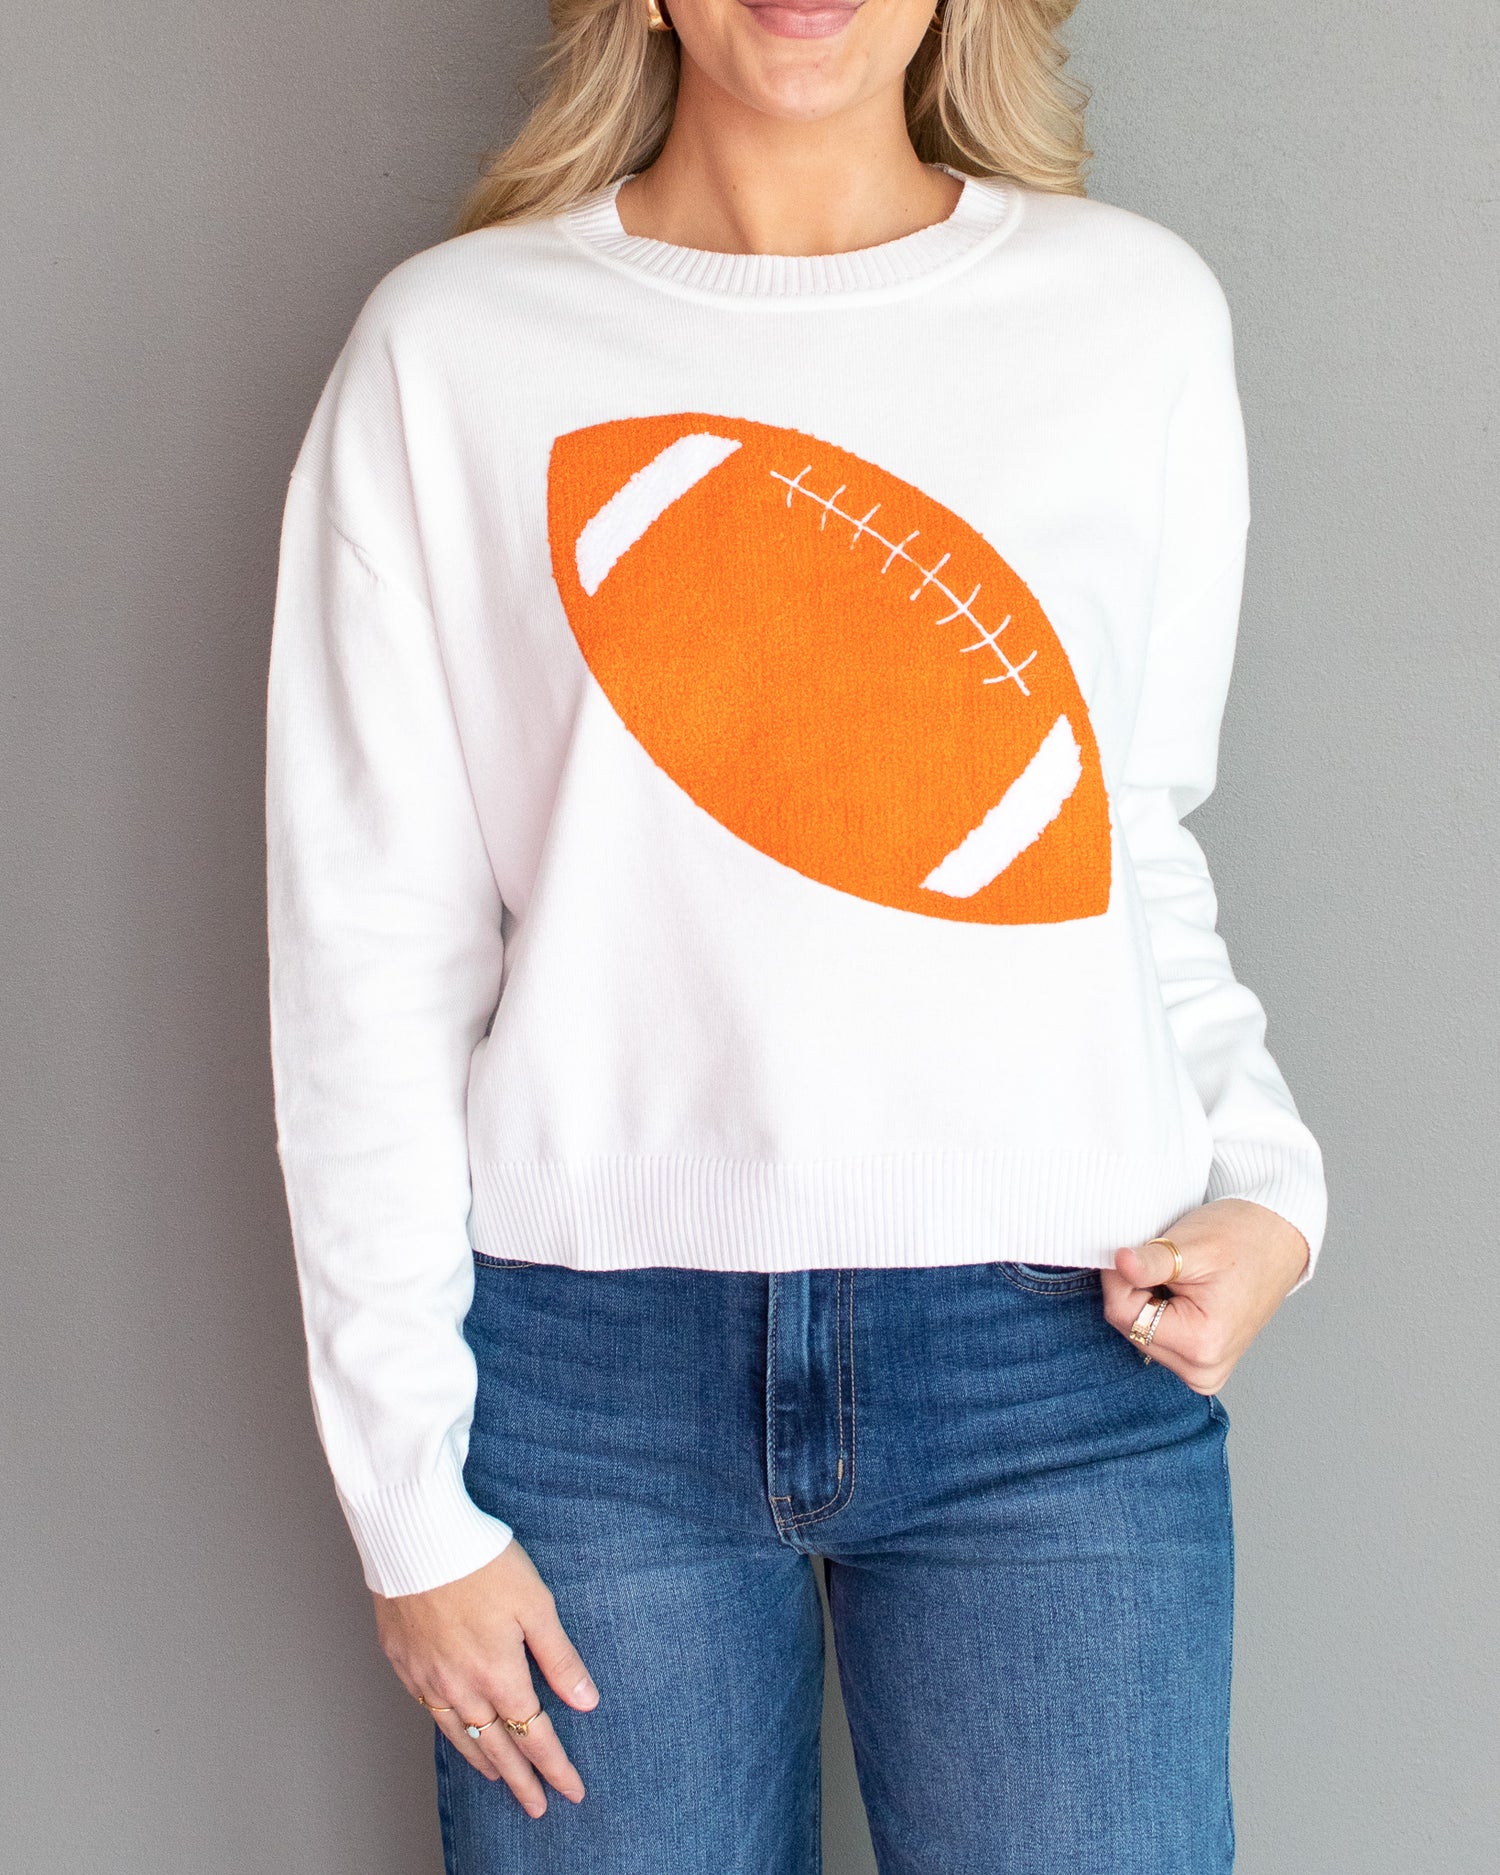 Big Orange Football Embroidered Sweater